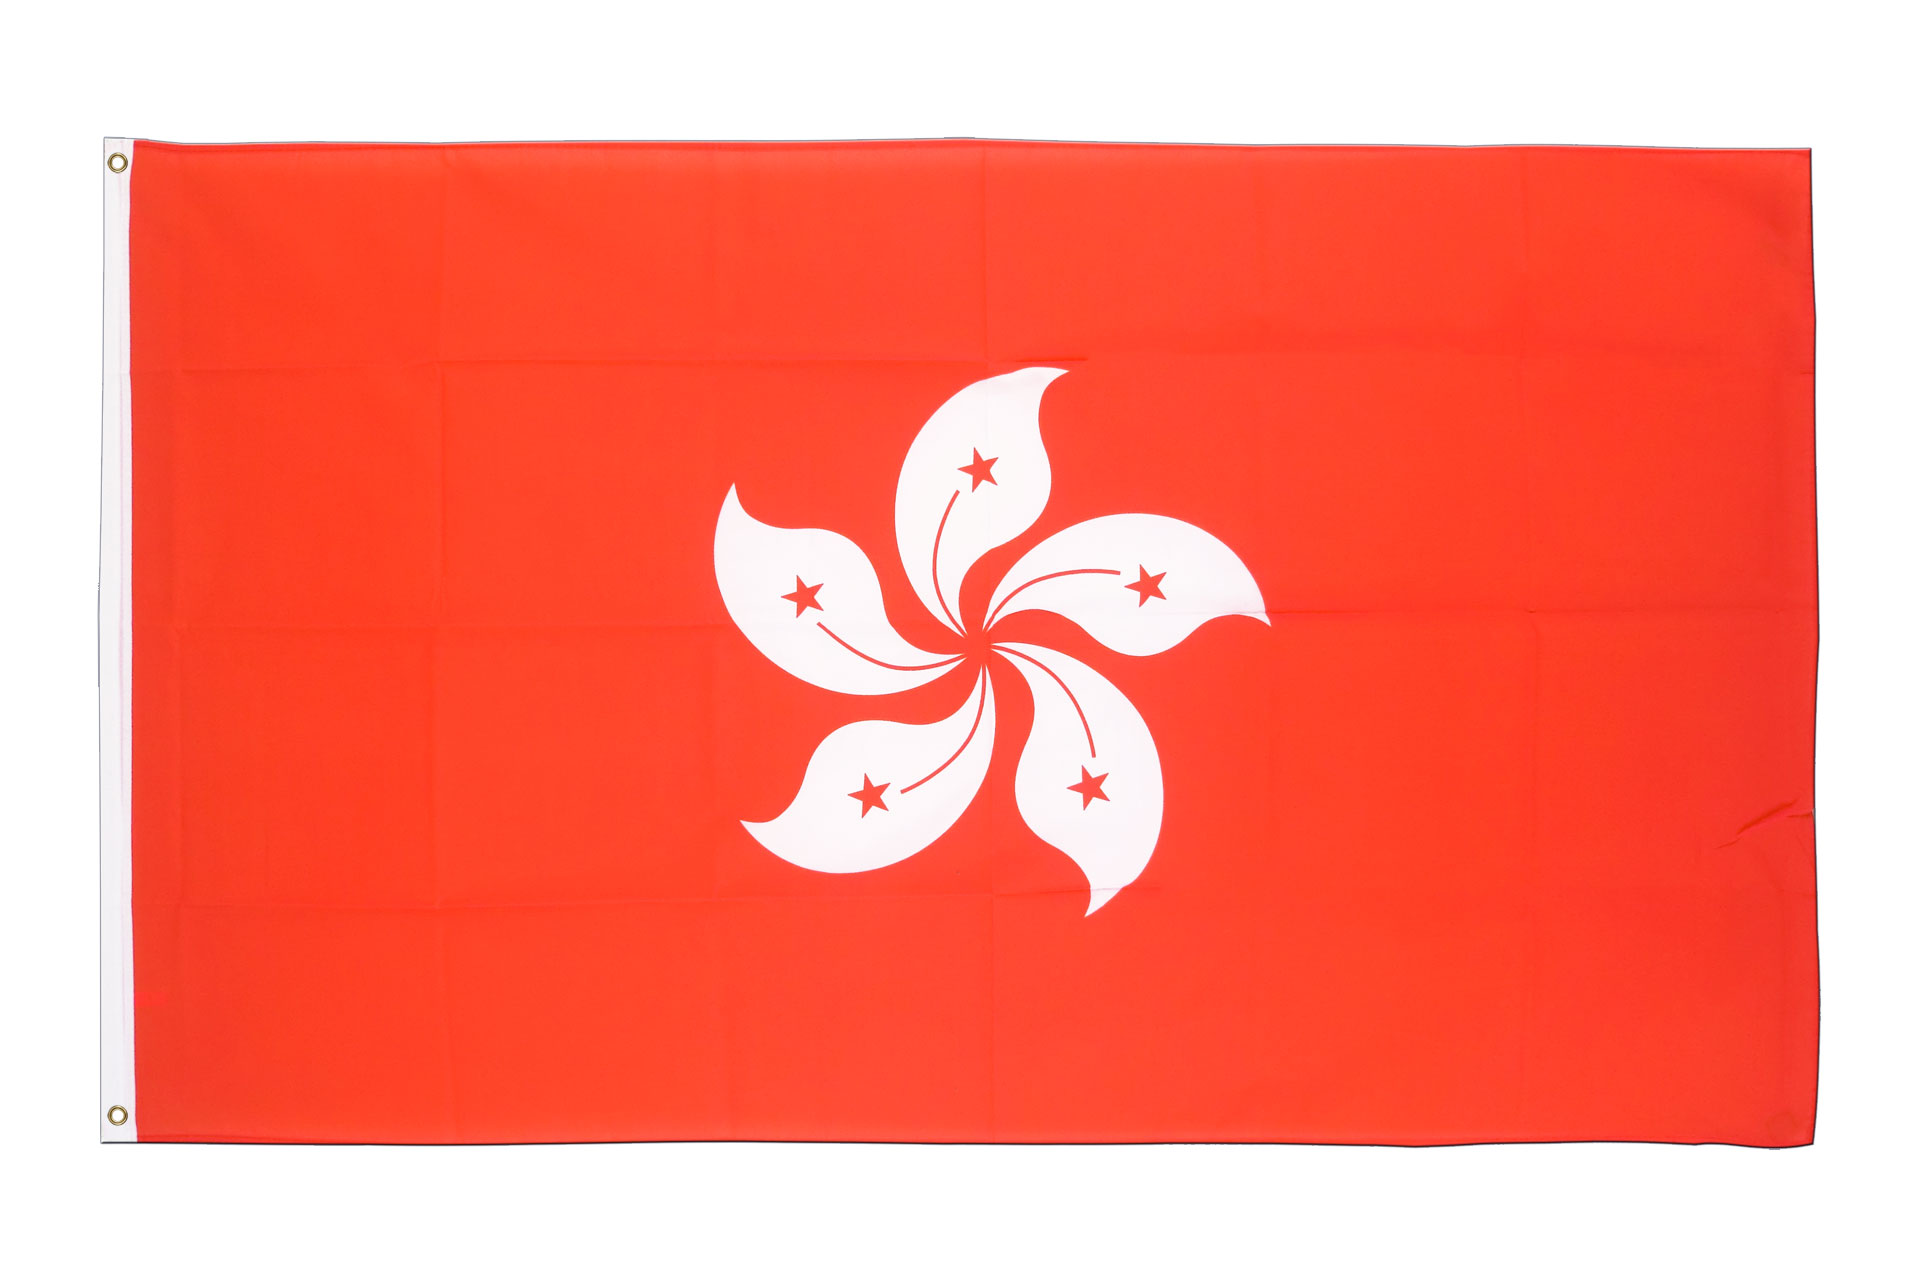 Hong Kong Flag for Sale - Buy online at Royal-Flags